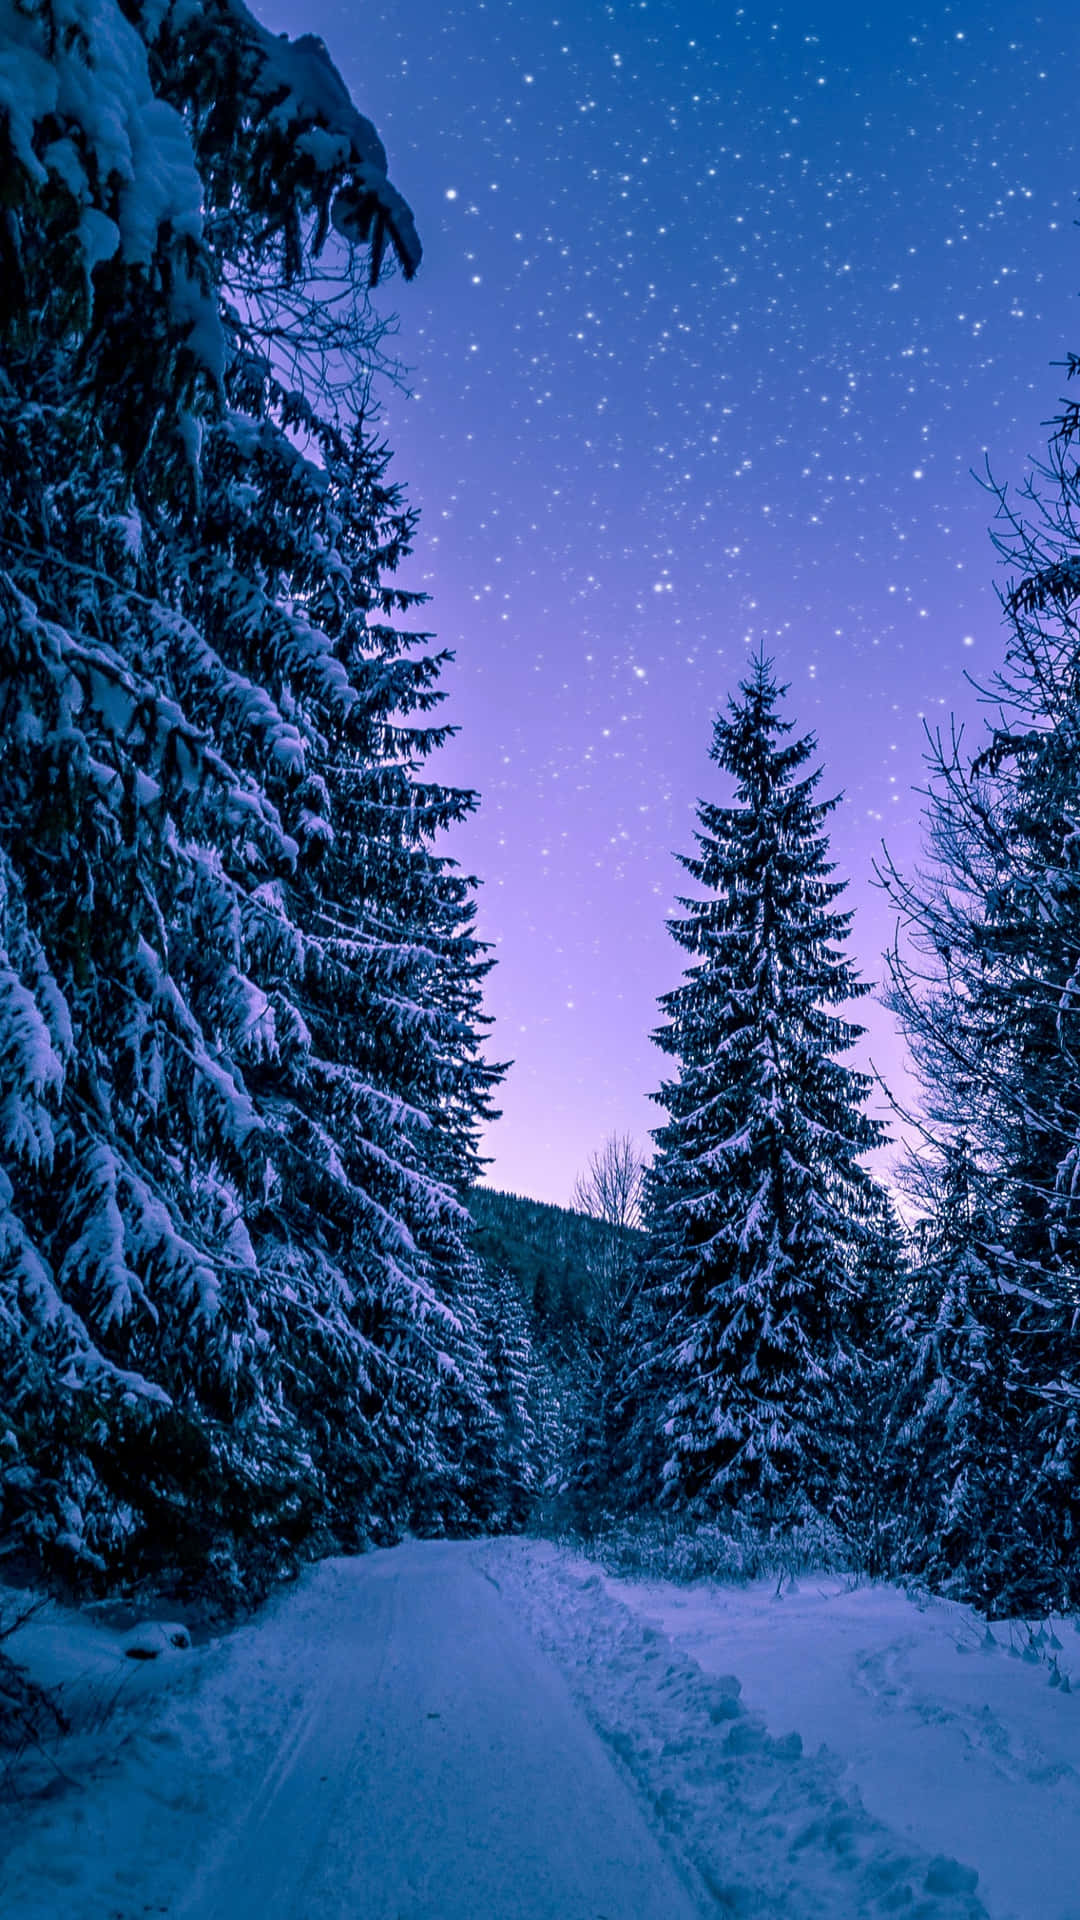 A Winter Snowfall Paints A Peaceful Winter Scene